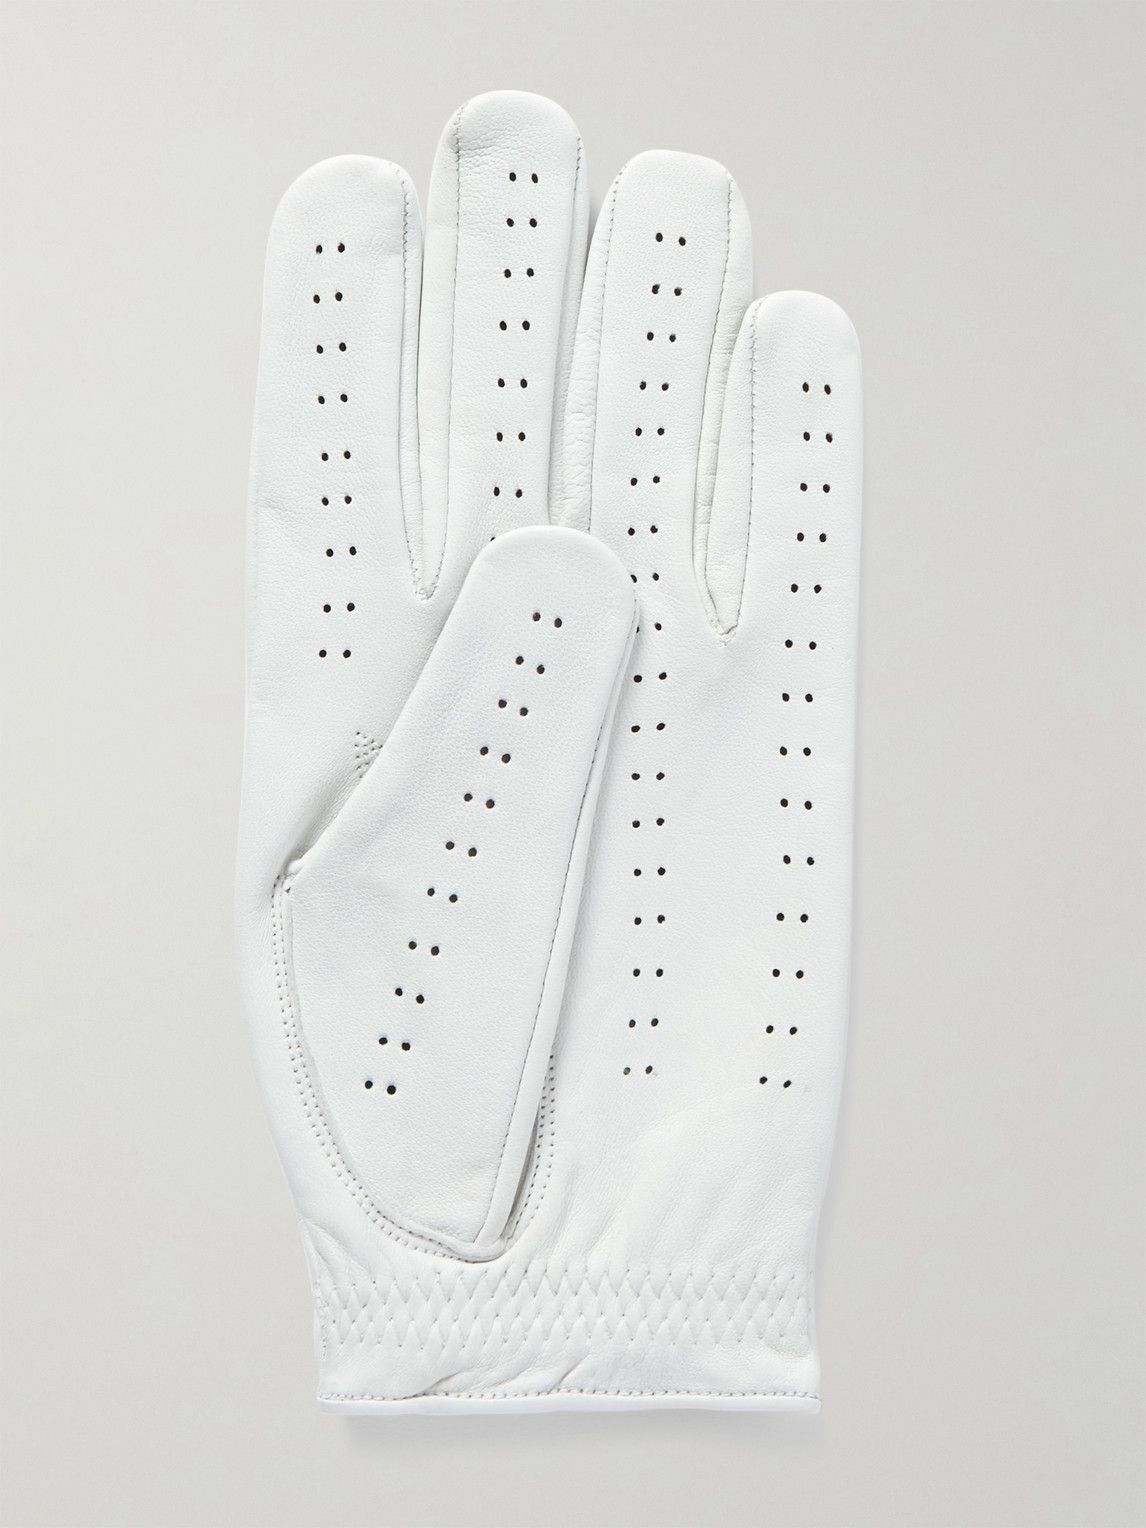 Malbon Golf - Perforated Leather Golf Glove - White Malbon Golf